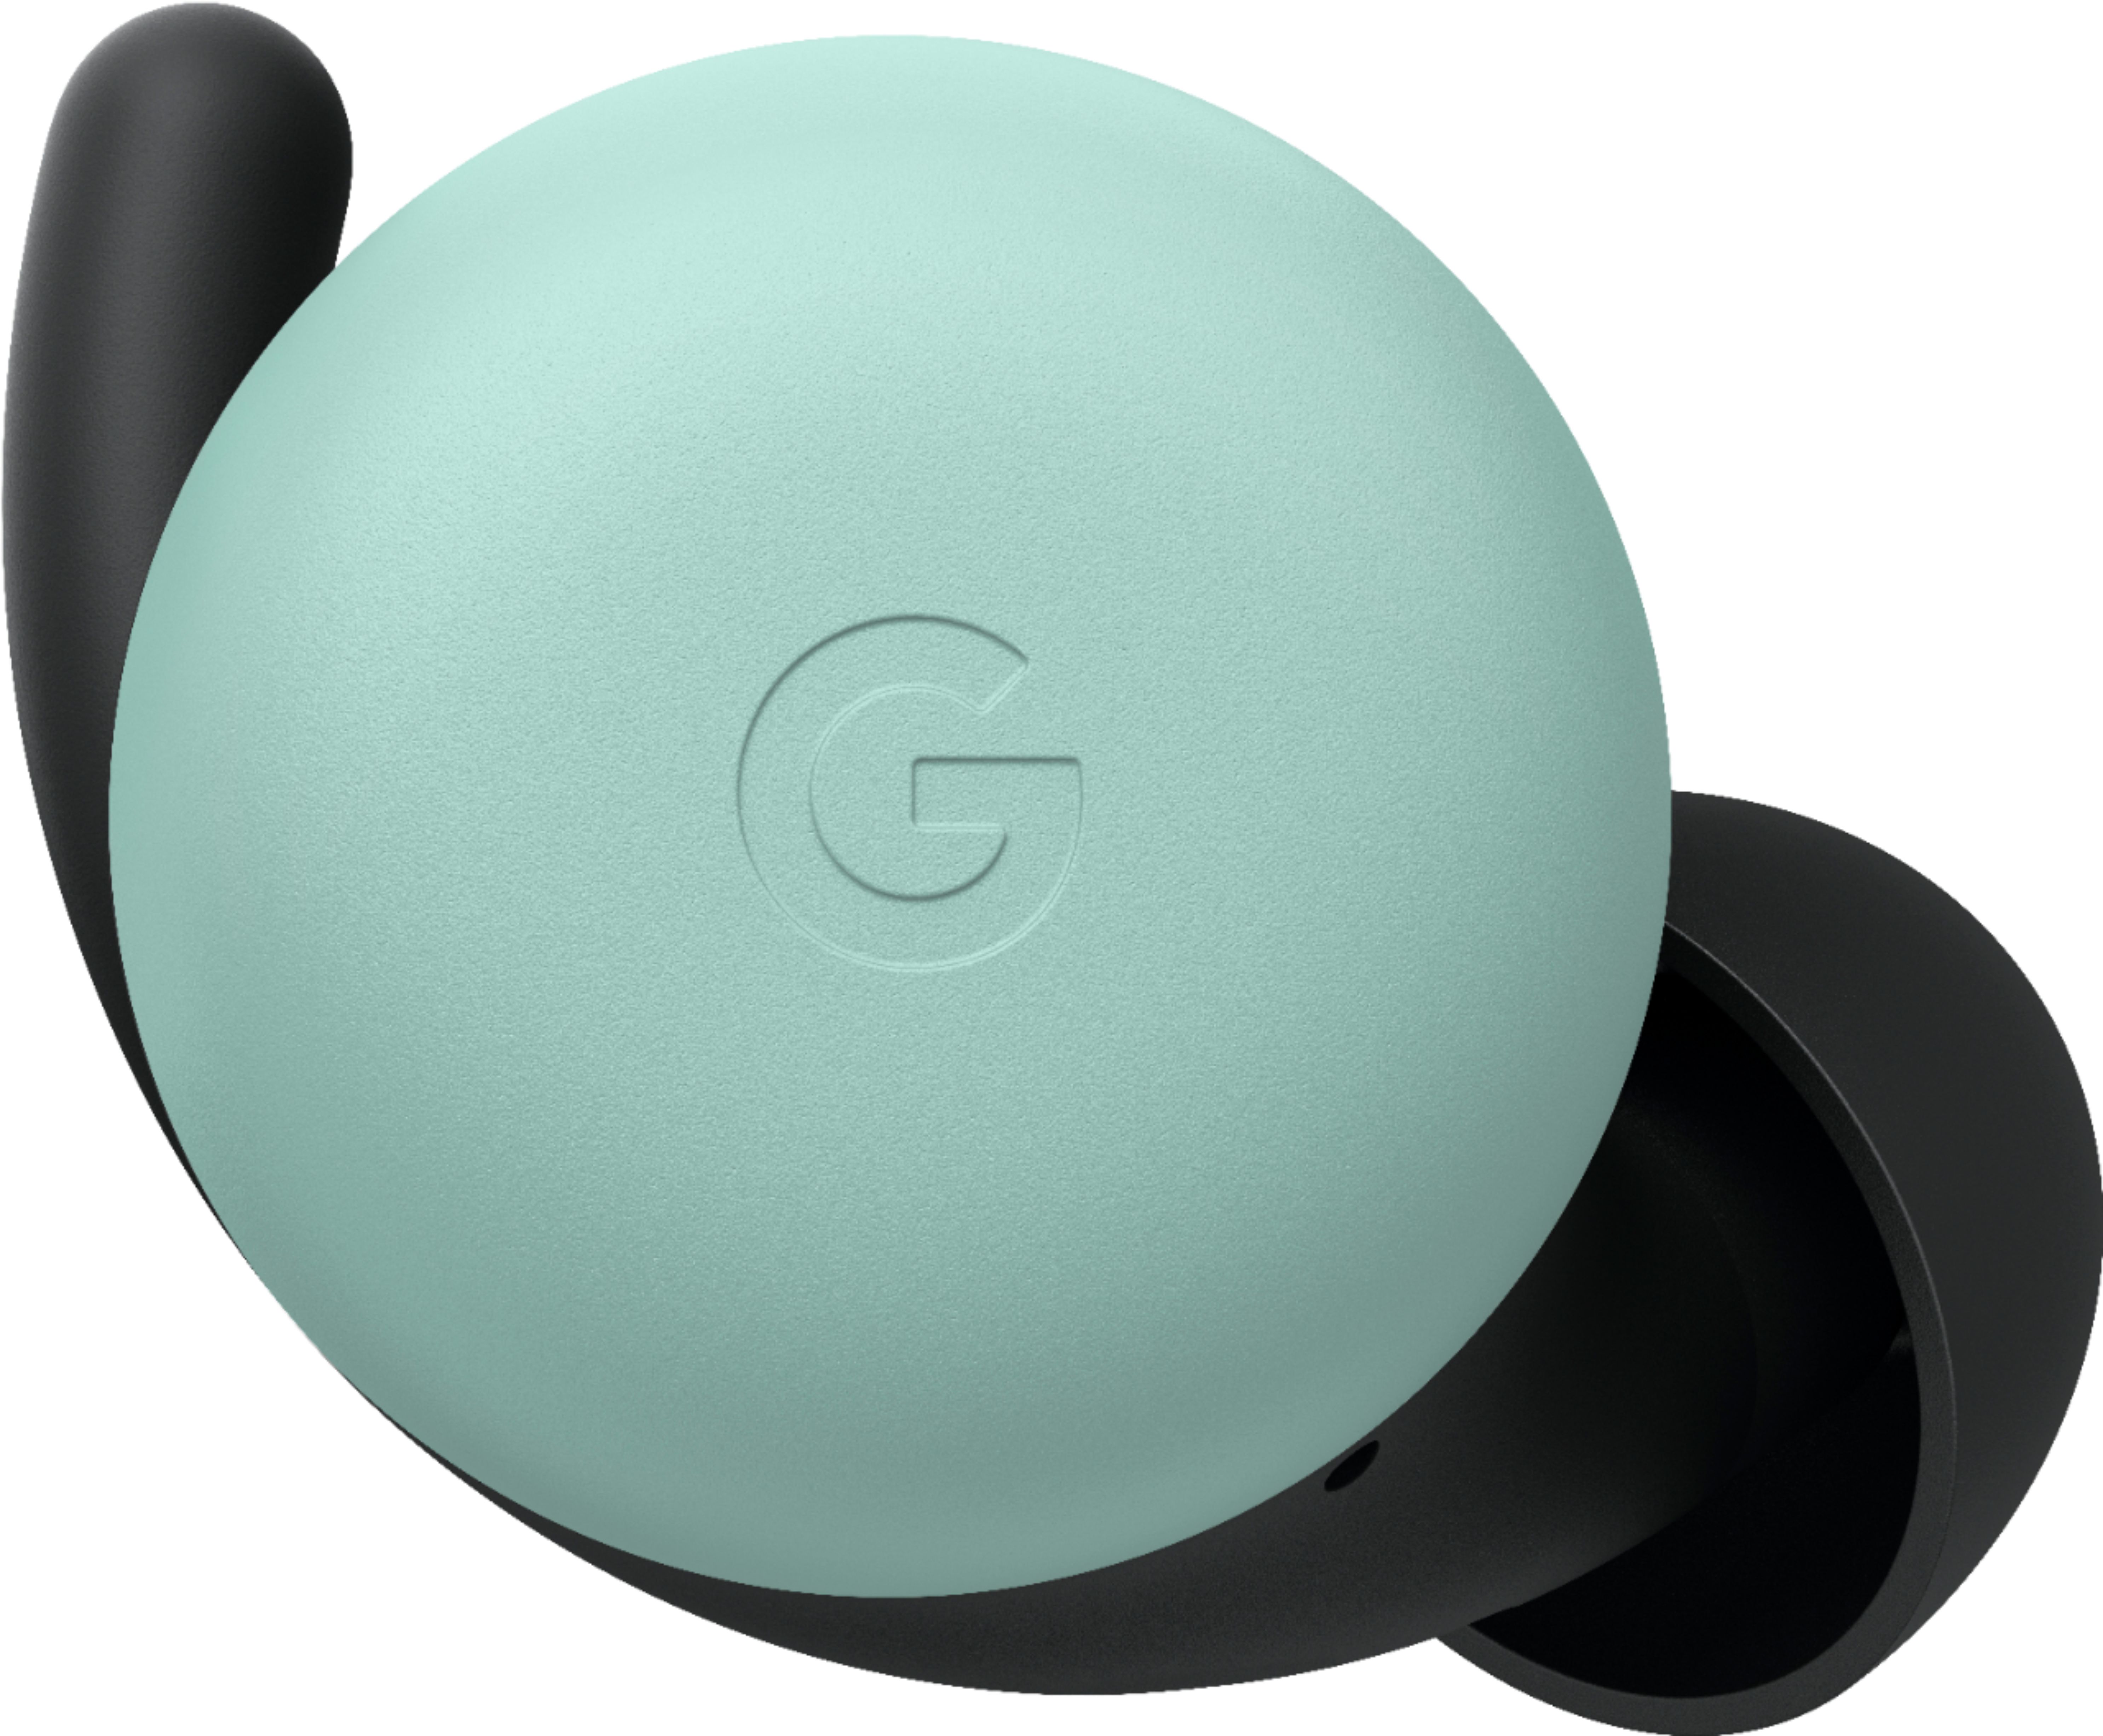 Best Buy: Google Pixel Buds True Wireless In-Ear Headphones Quite